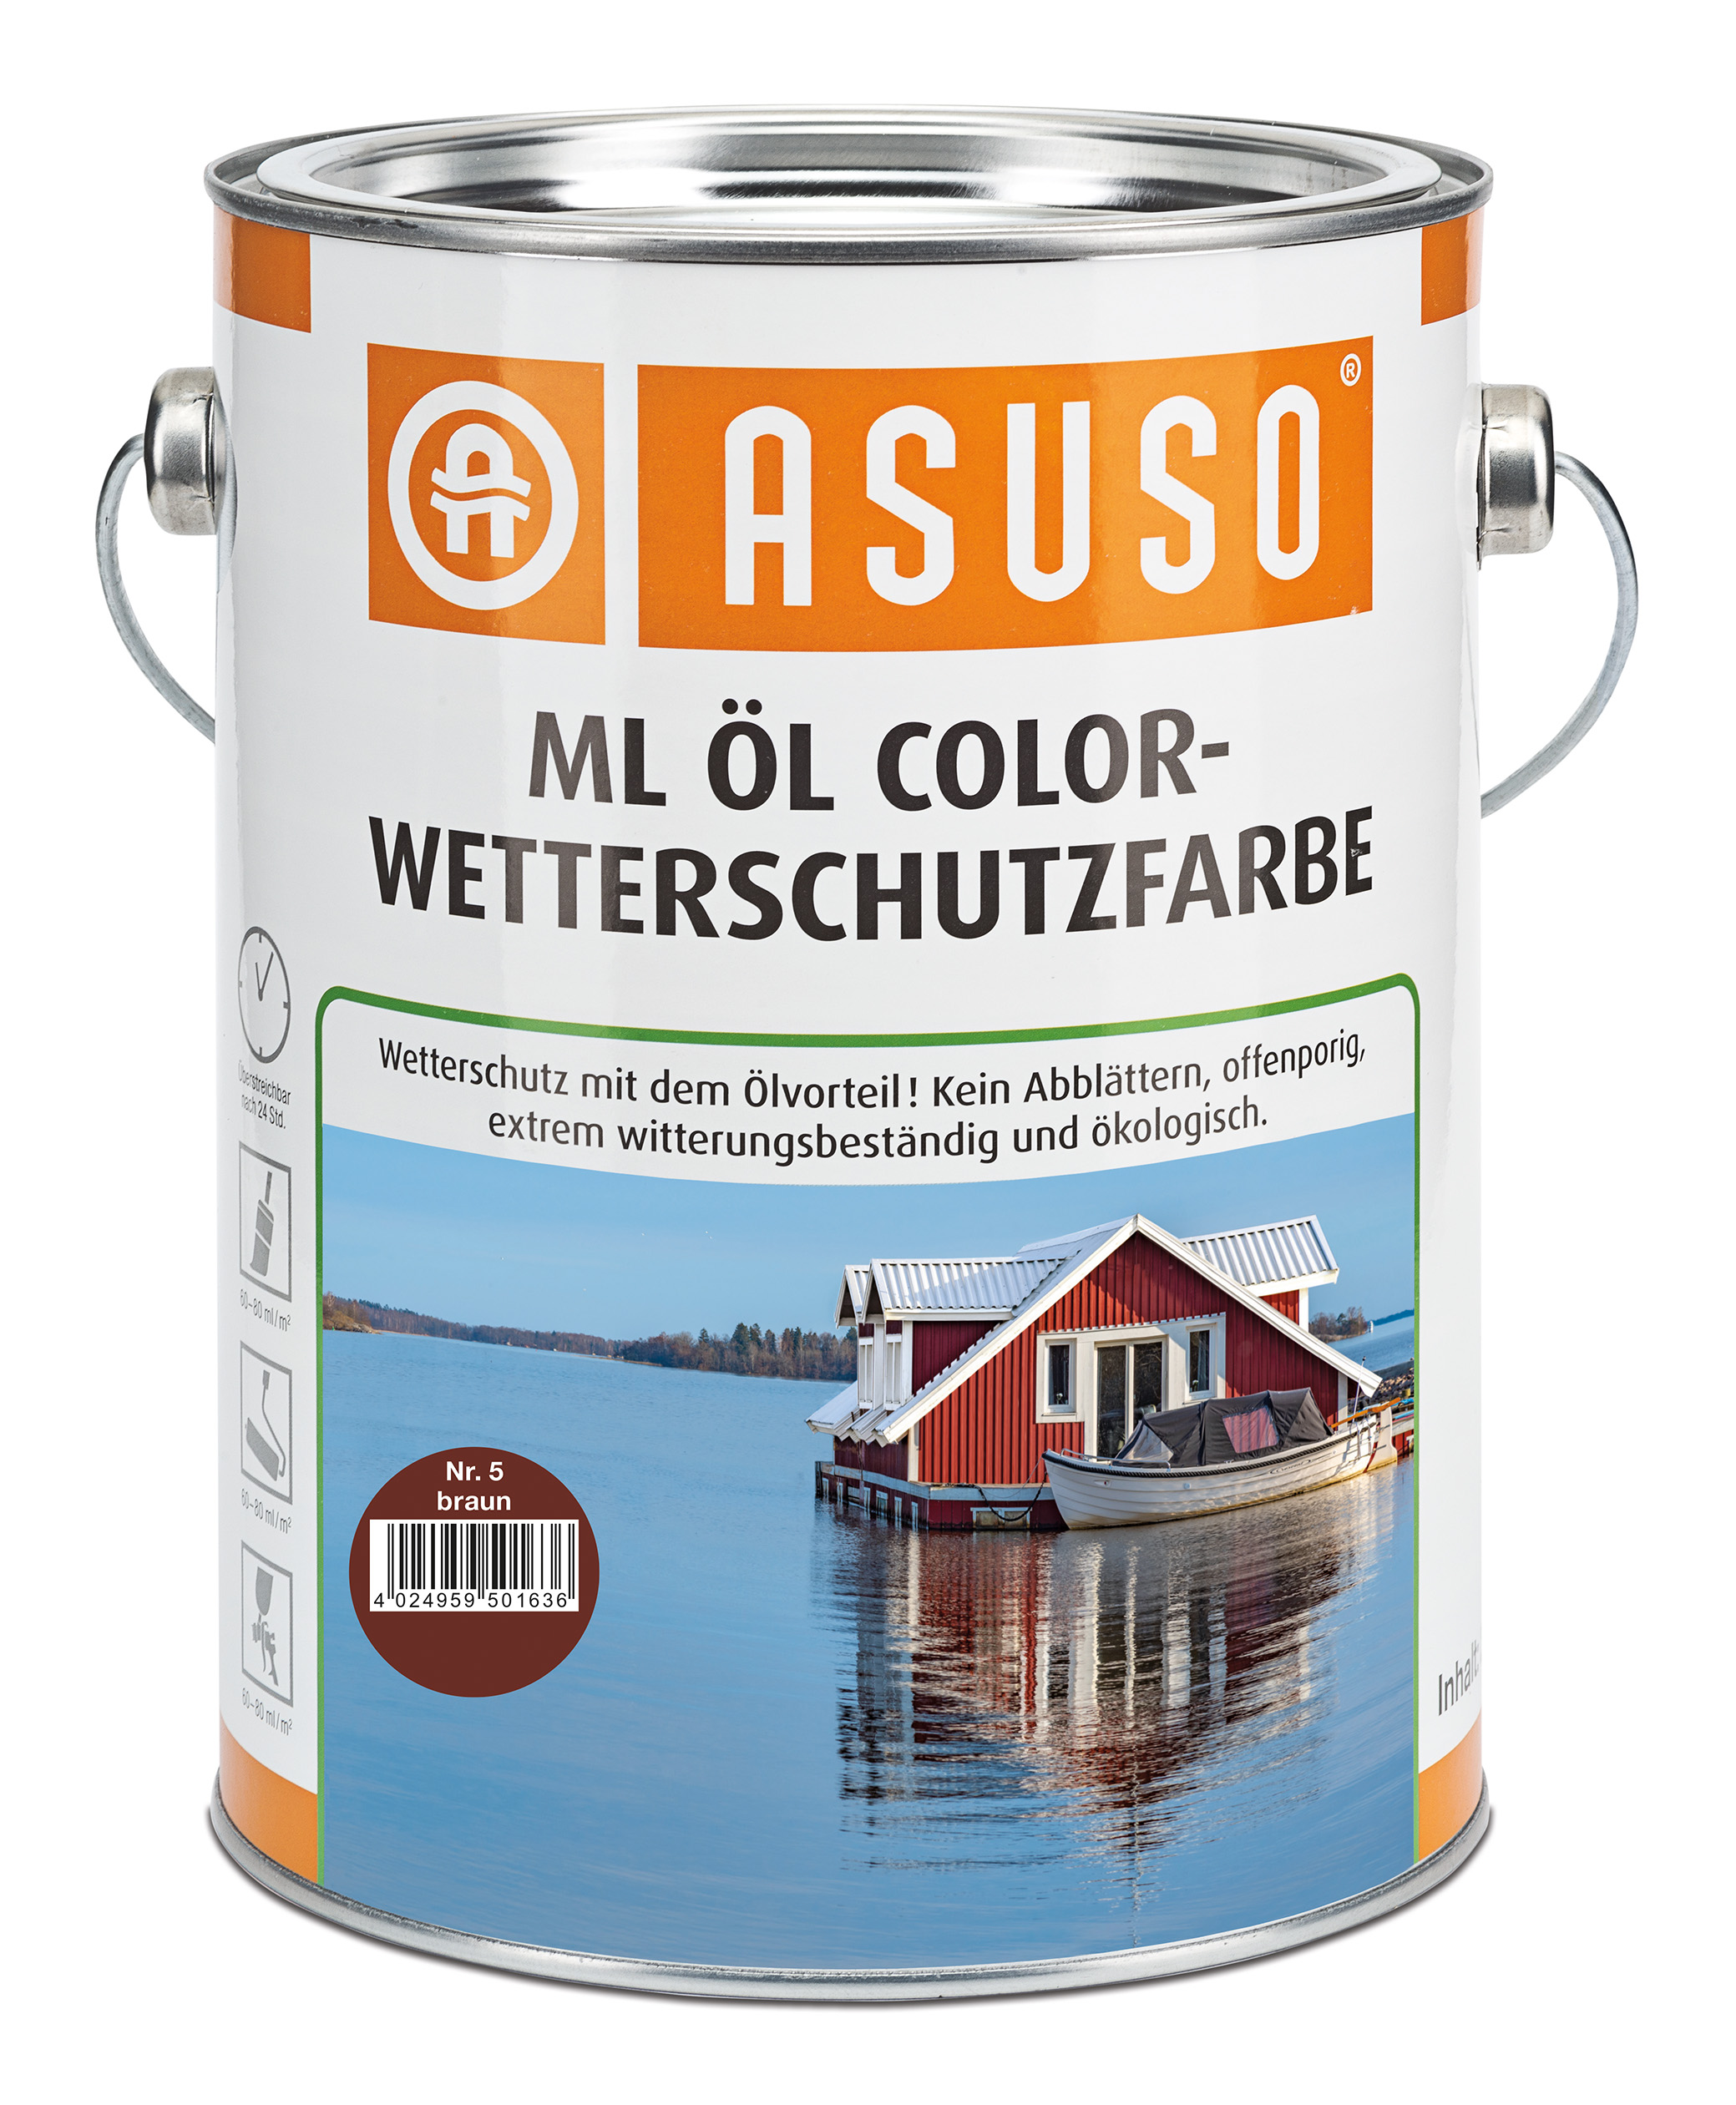 ASUSO ML Öl Color-Wetterschutzfarbe – Braun